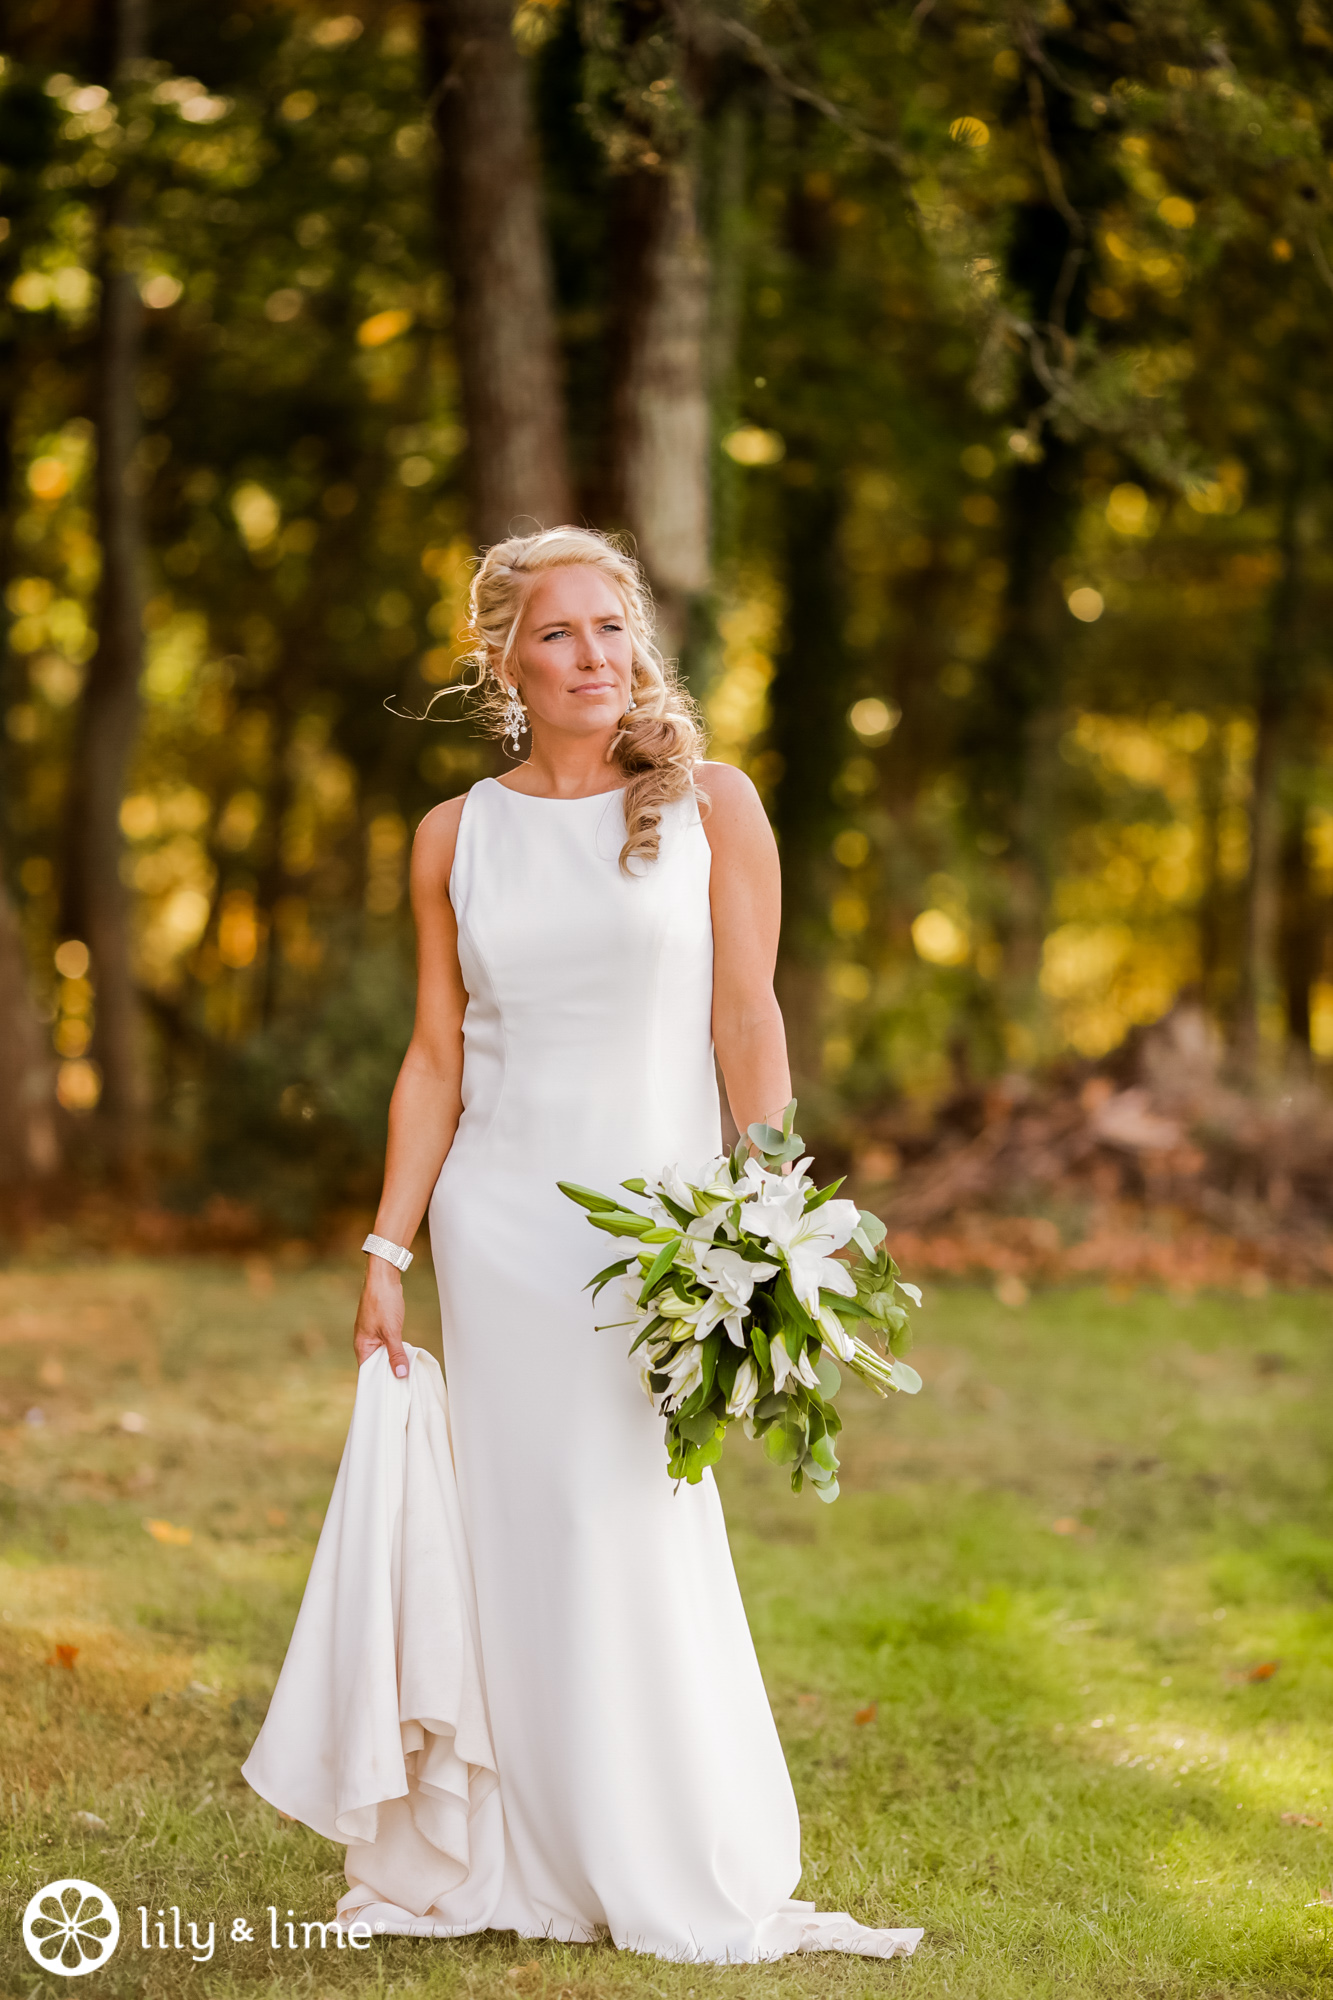 The Best Hairstyles for Your Wedding Dress Neckline - Viero Bridal